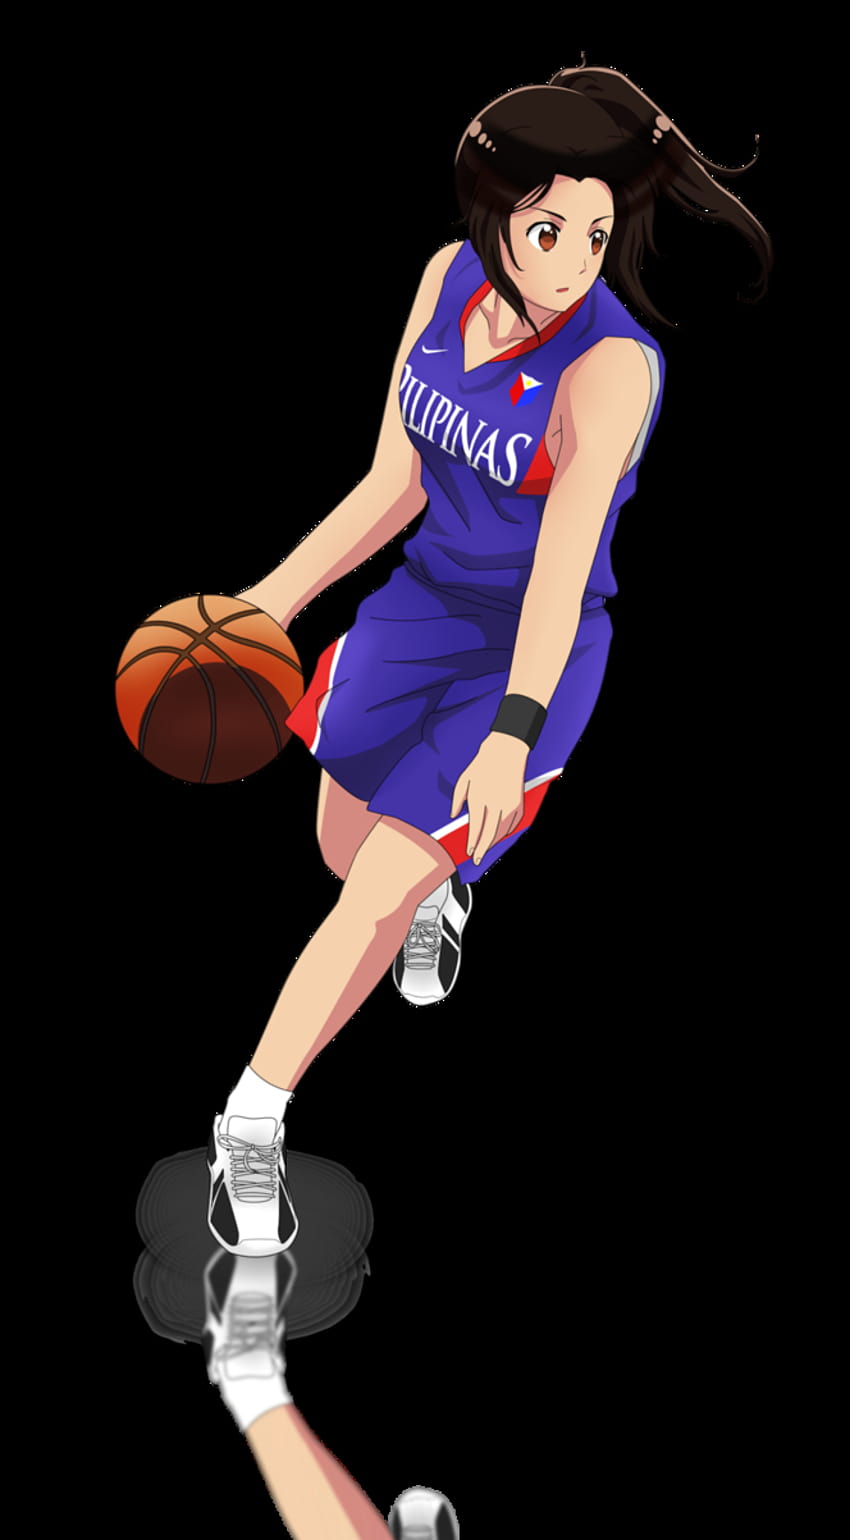 Kuroko's Basketball TV Anime Gets Year-Long 10th Anniversary Celebrations -  Crunchyroll News